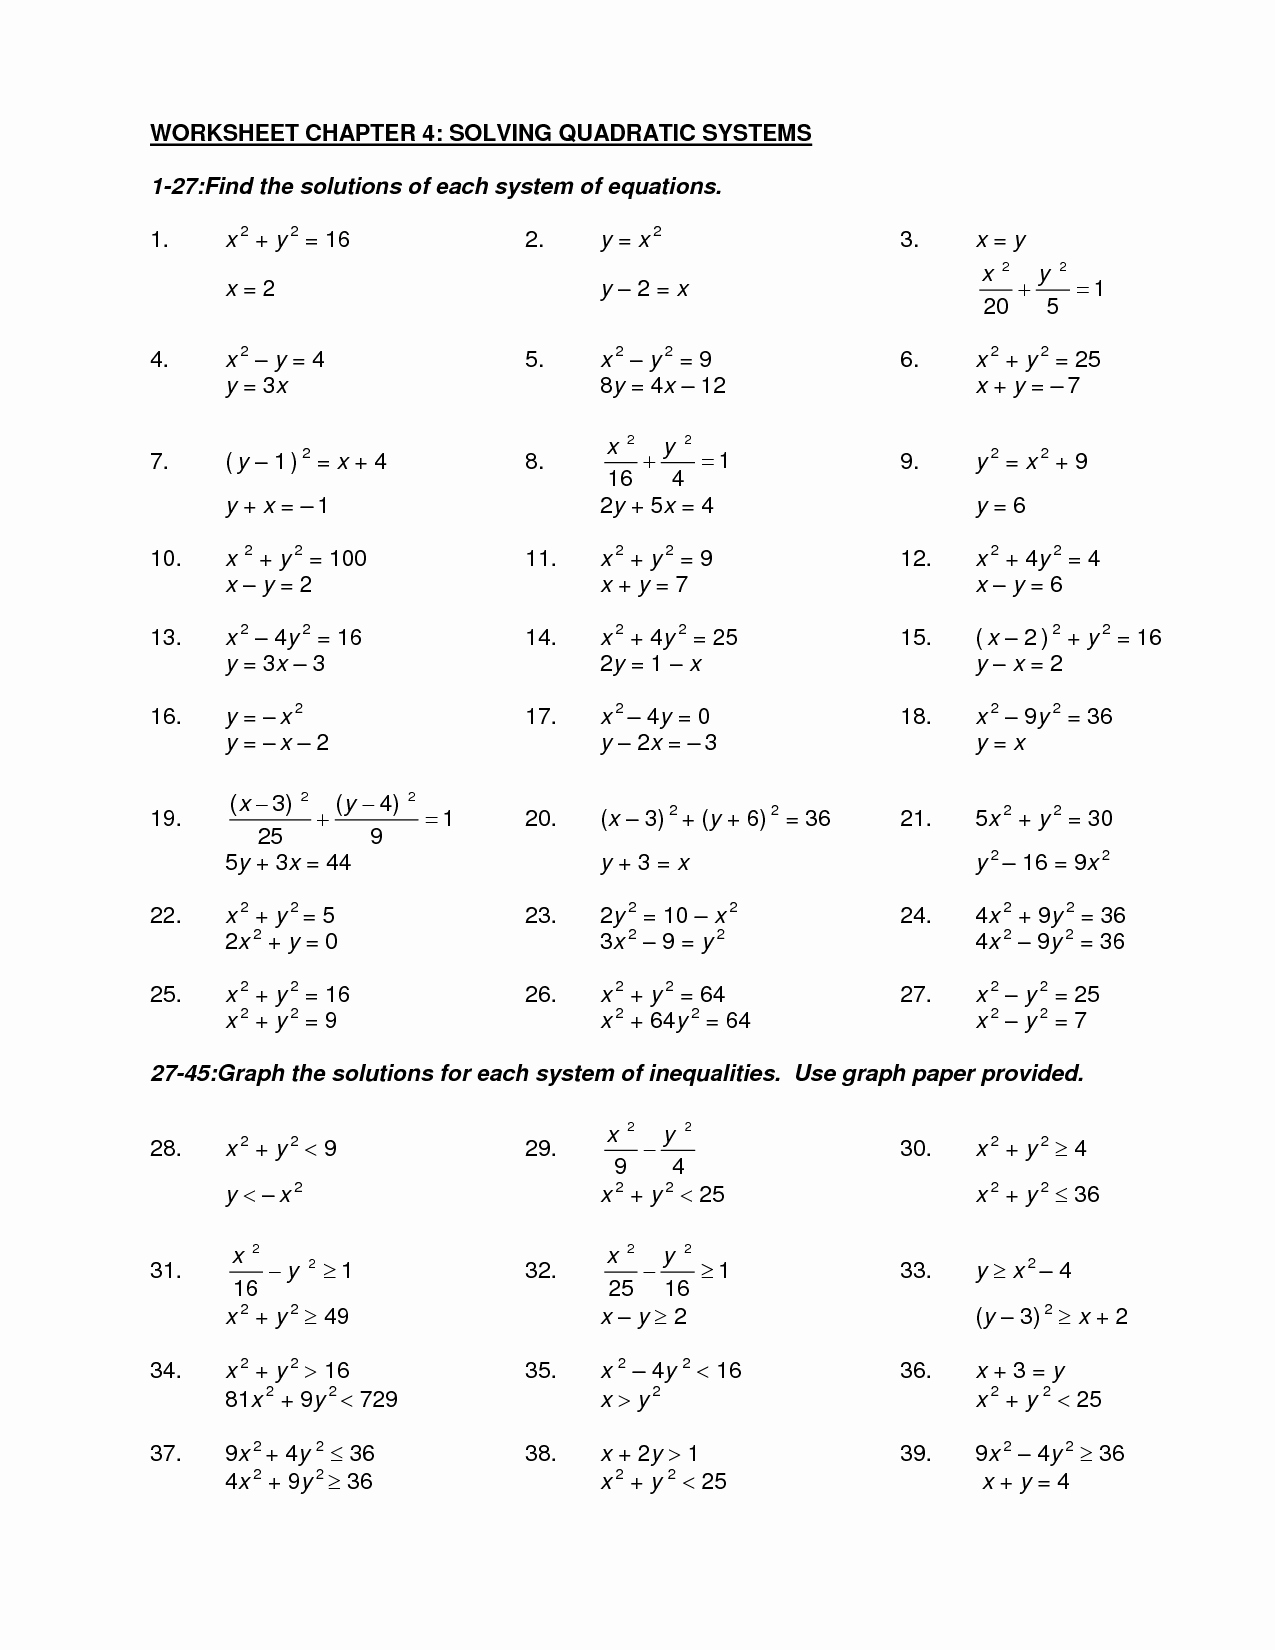 Factoring Quadratic Expressions Worksheet Answers Fresh Printables solving Quadratic Equations Worksheet